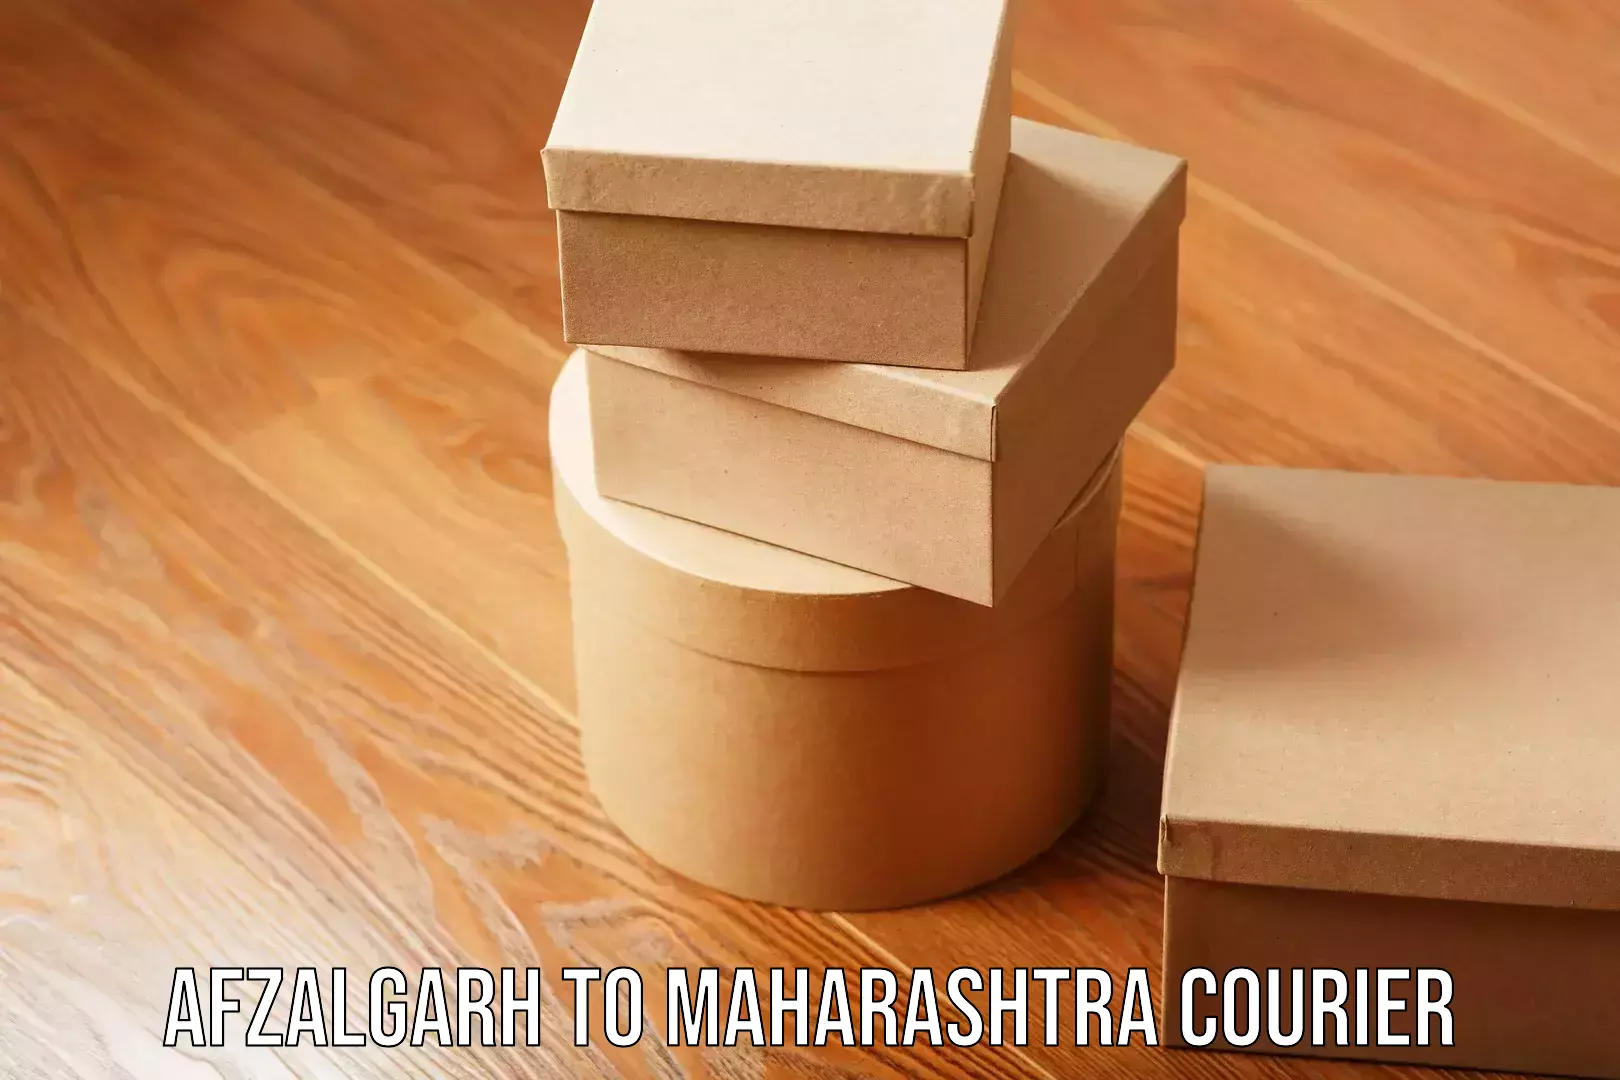 Business delivery service Afzalgarh to Maharashtra